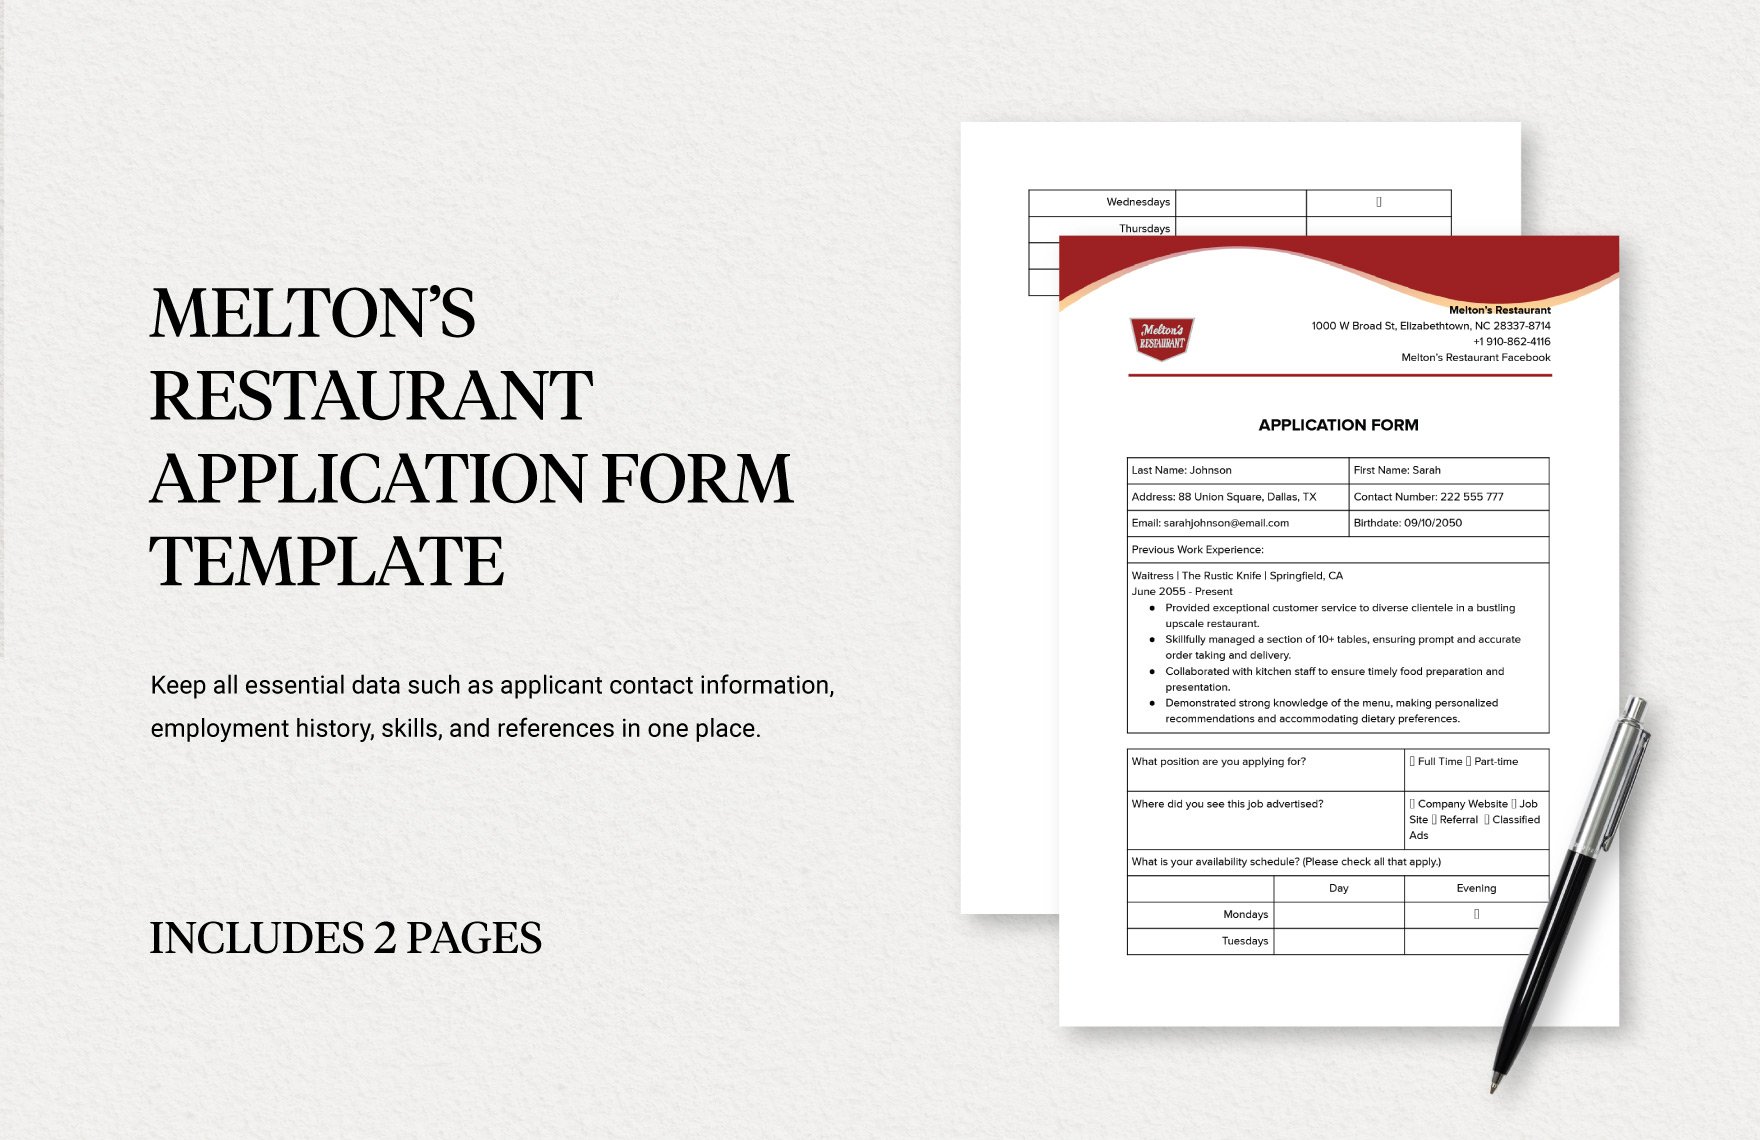 Melton's Restaurant Application Form Template